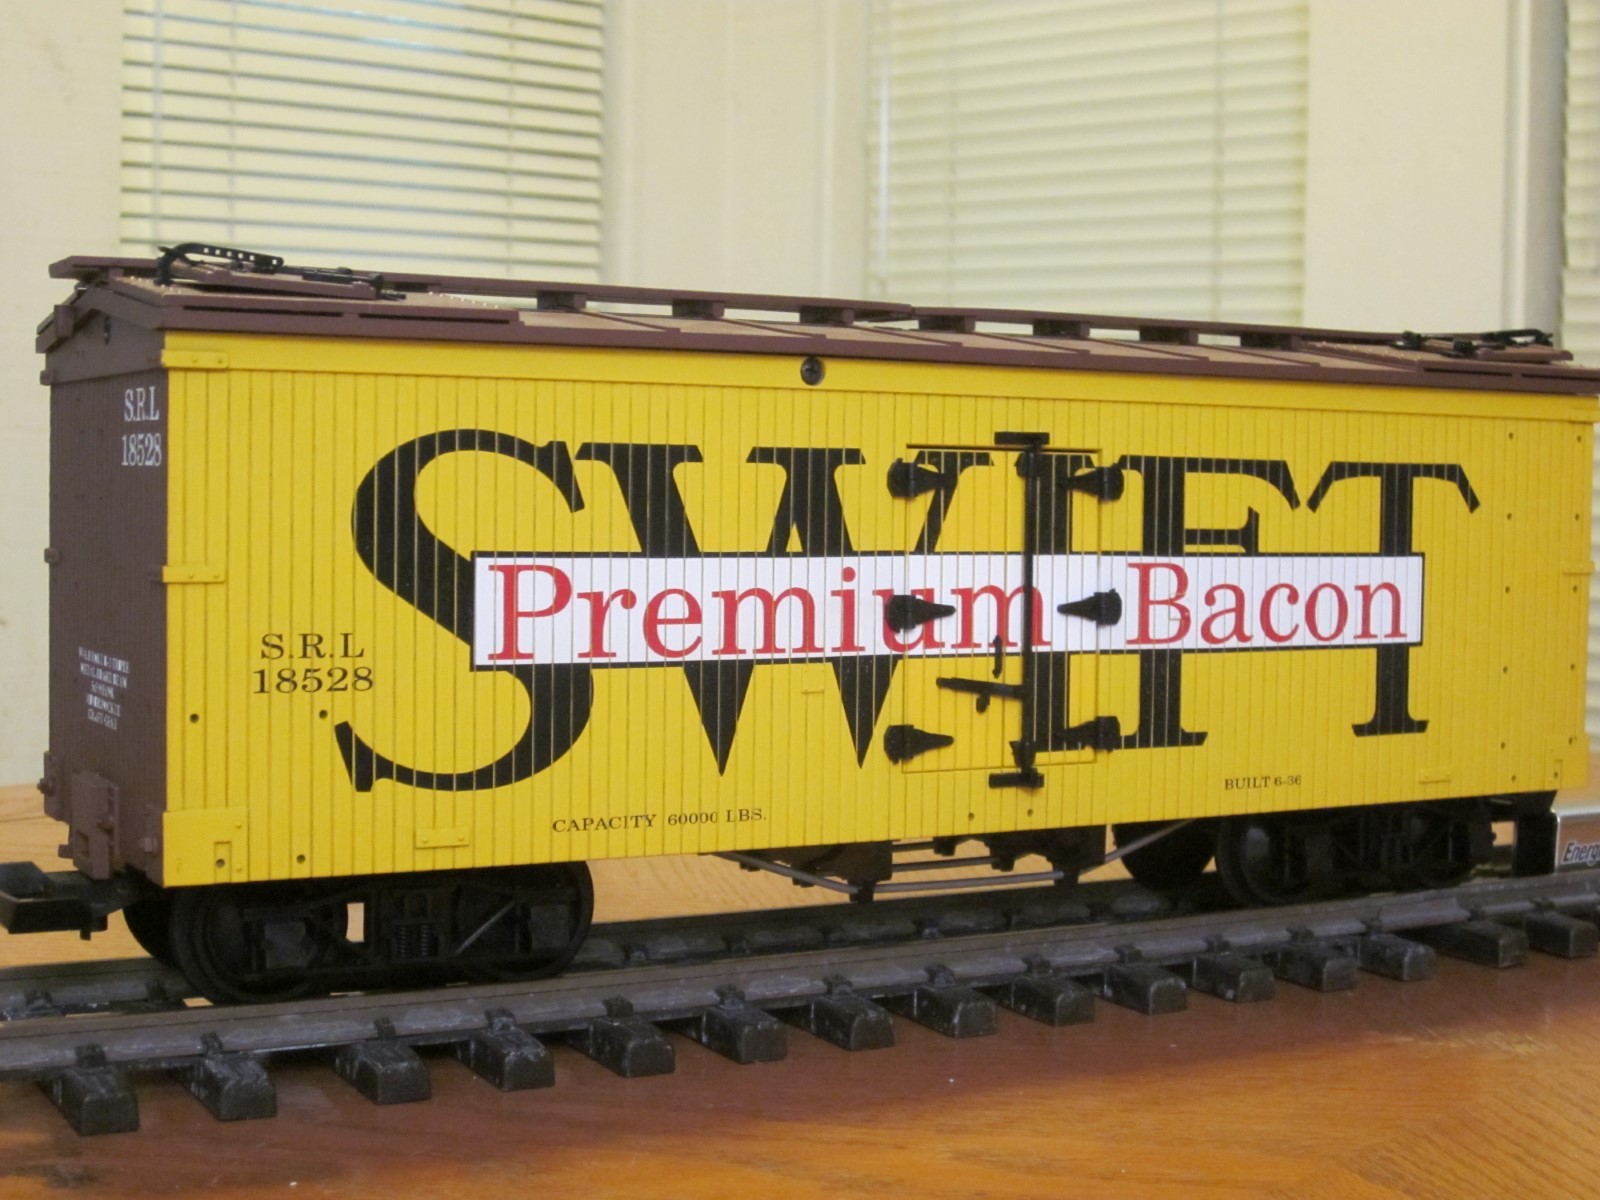 R1673 Swift Bacon SRL 18528